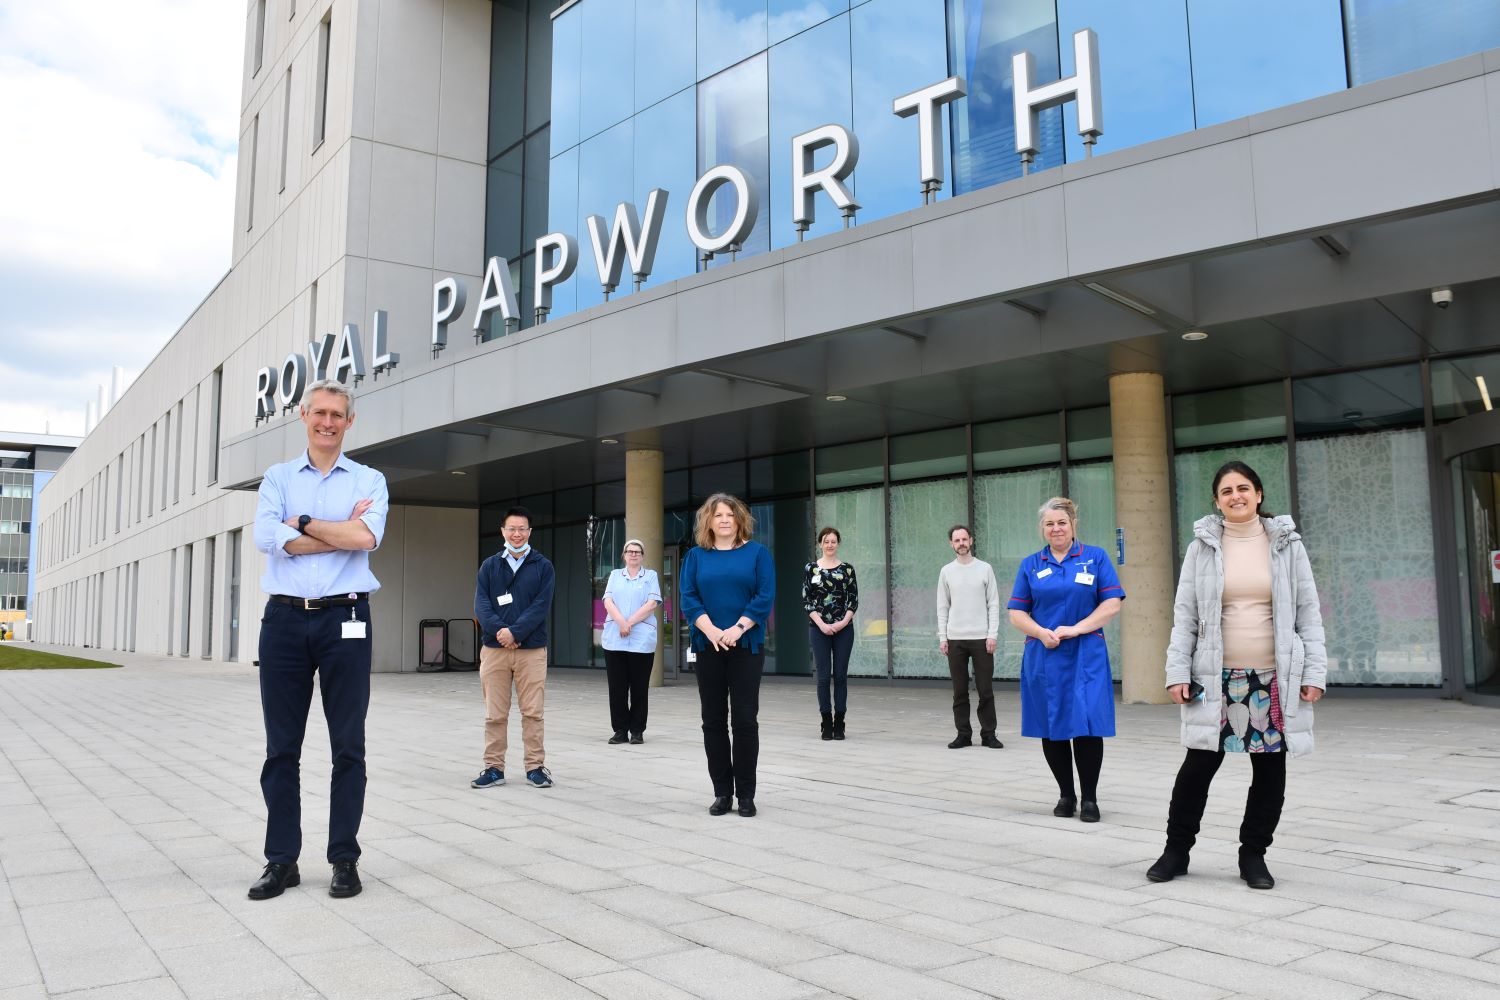 People stood outside Royal Papworth Hospital